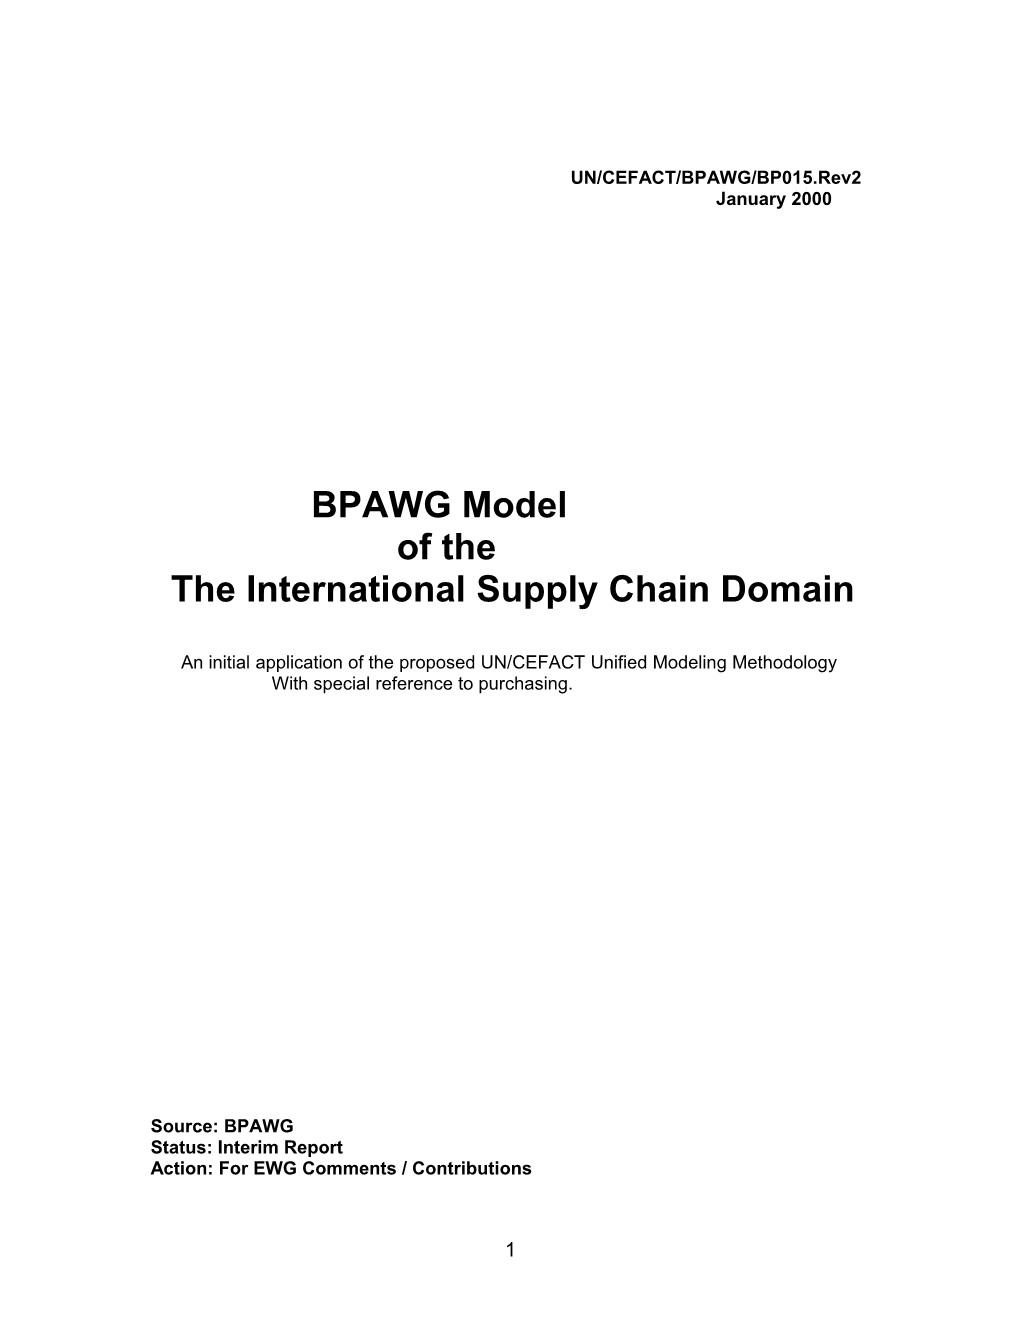 The International Supply Chain Domain